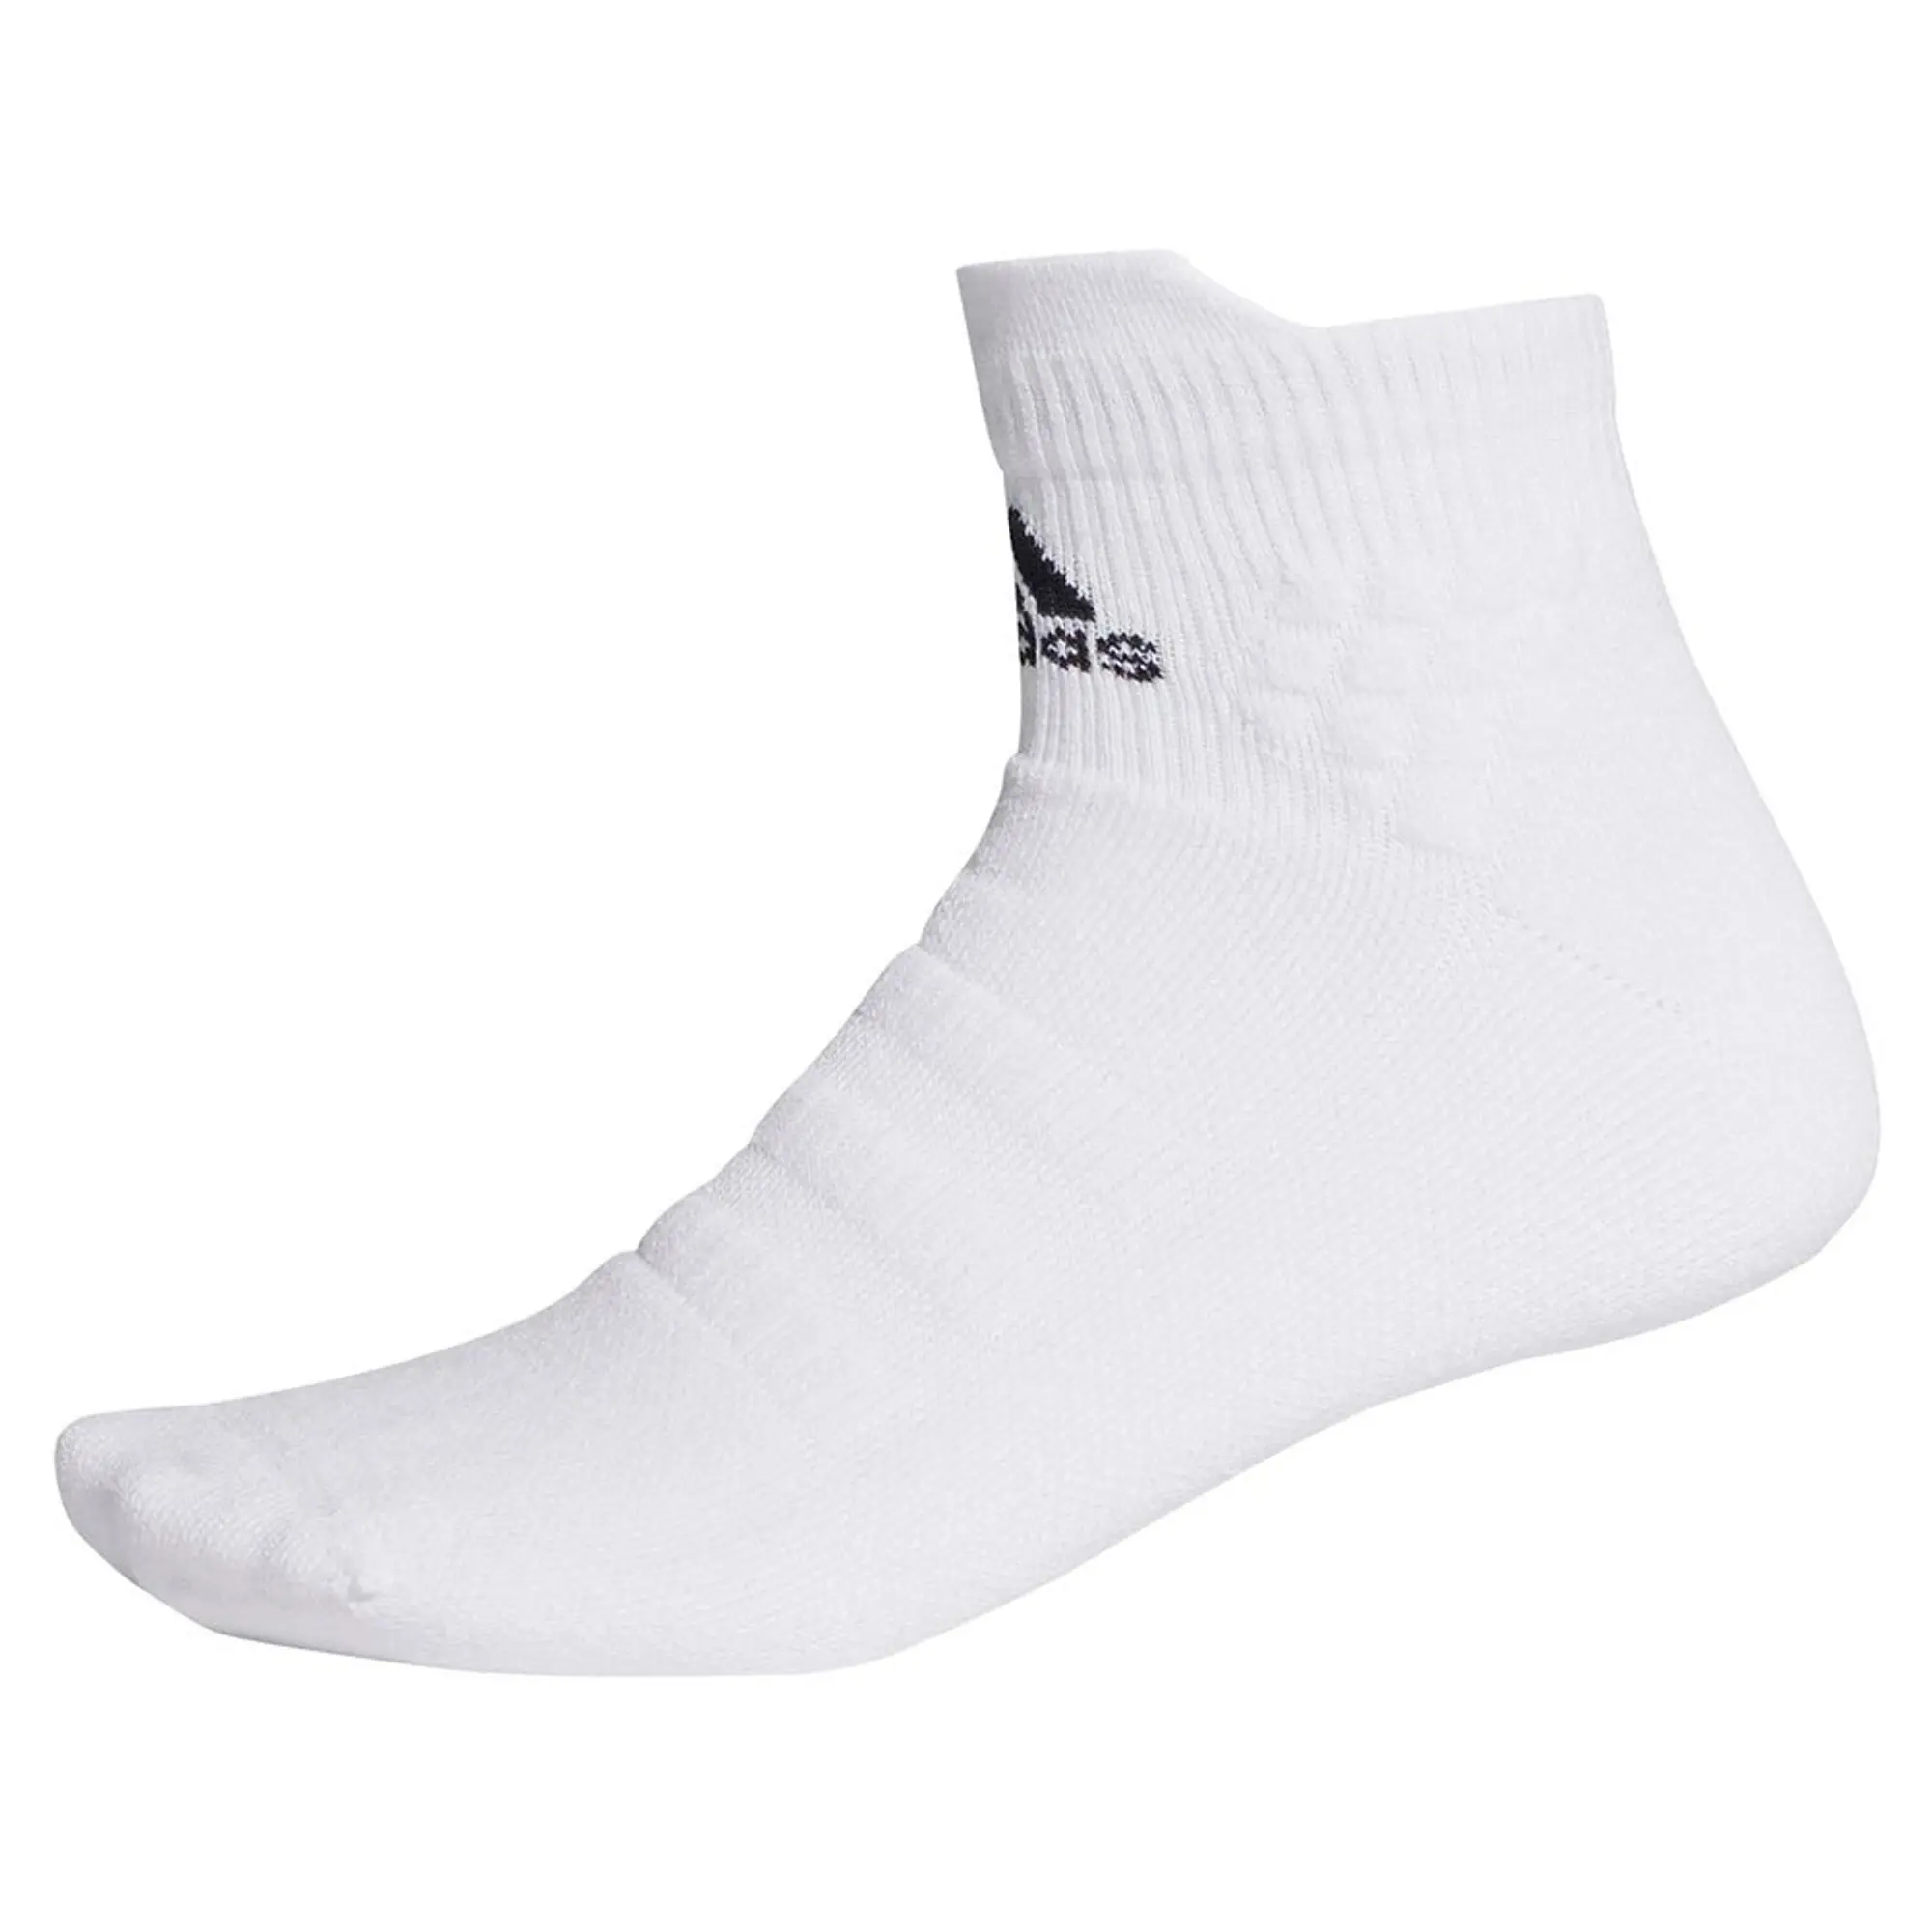 Adidas Alphaskin Ankle Max Cushion Socks  - White